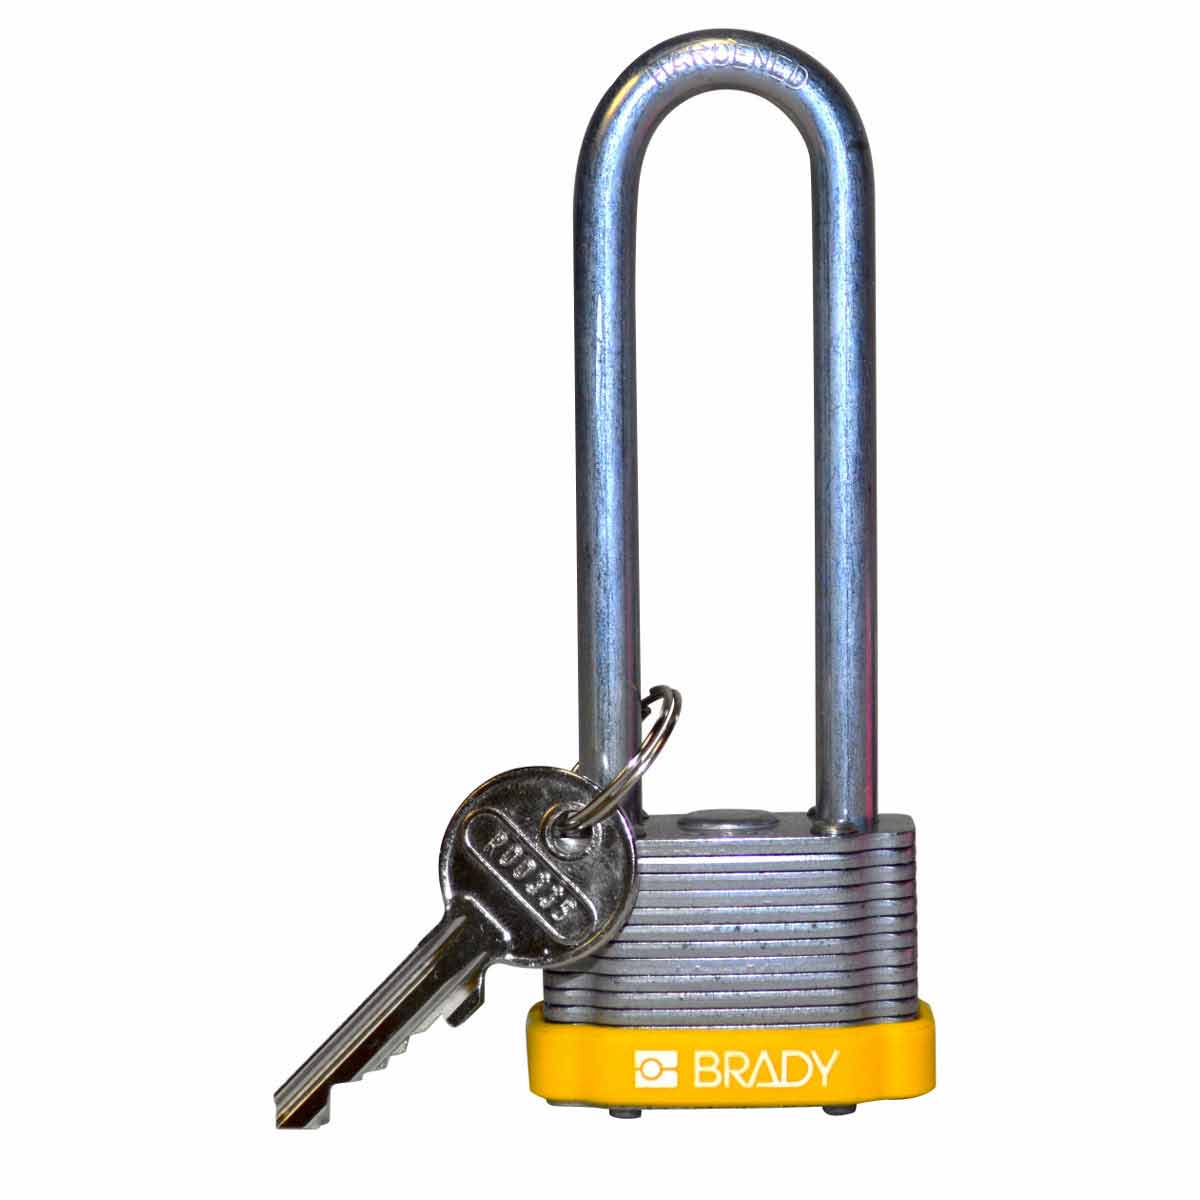 Brady® 123247 Heavy Duty Key Retaining Safety Padlock, Different Key, Yellow, Laminated Steel Body, 1/4 in Dia x 3 in H x 0.8 in W Triple Coated Hardened Steel Shackle, 1.1 in L Body